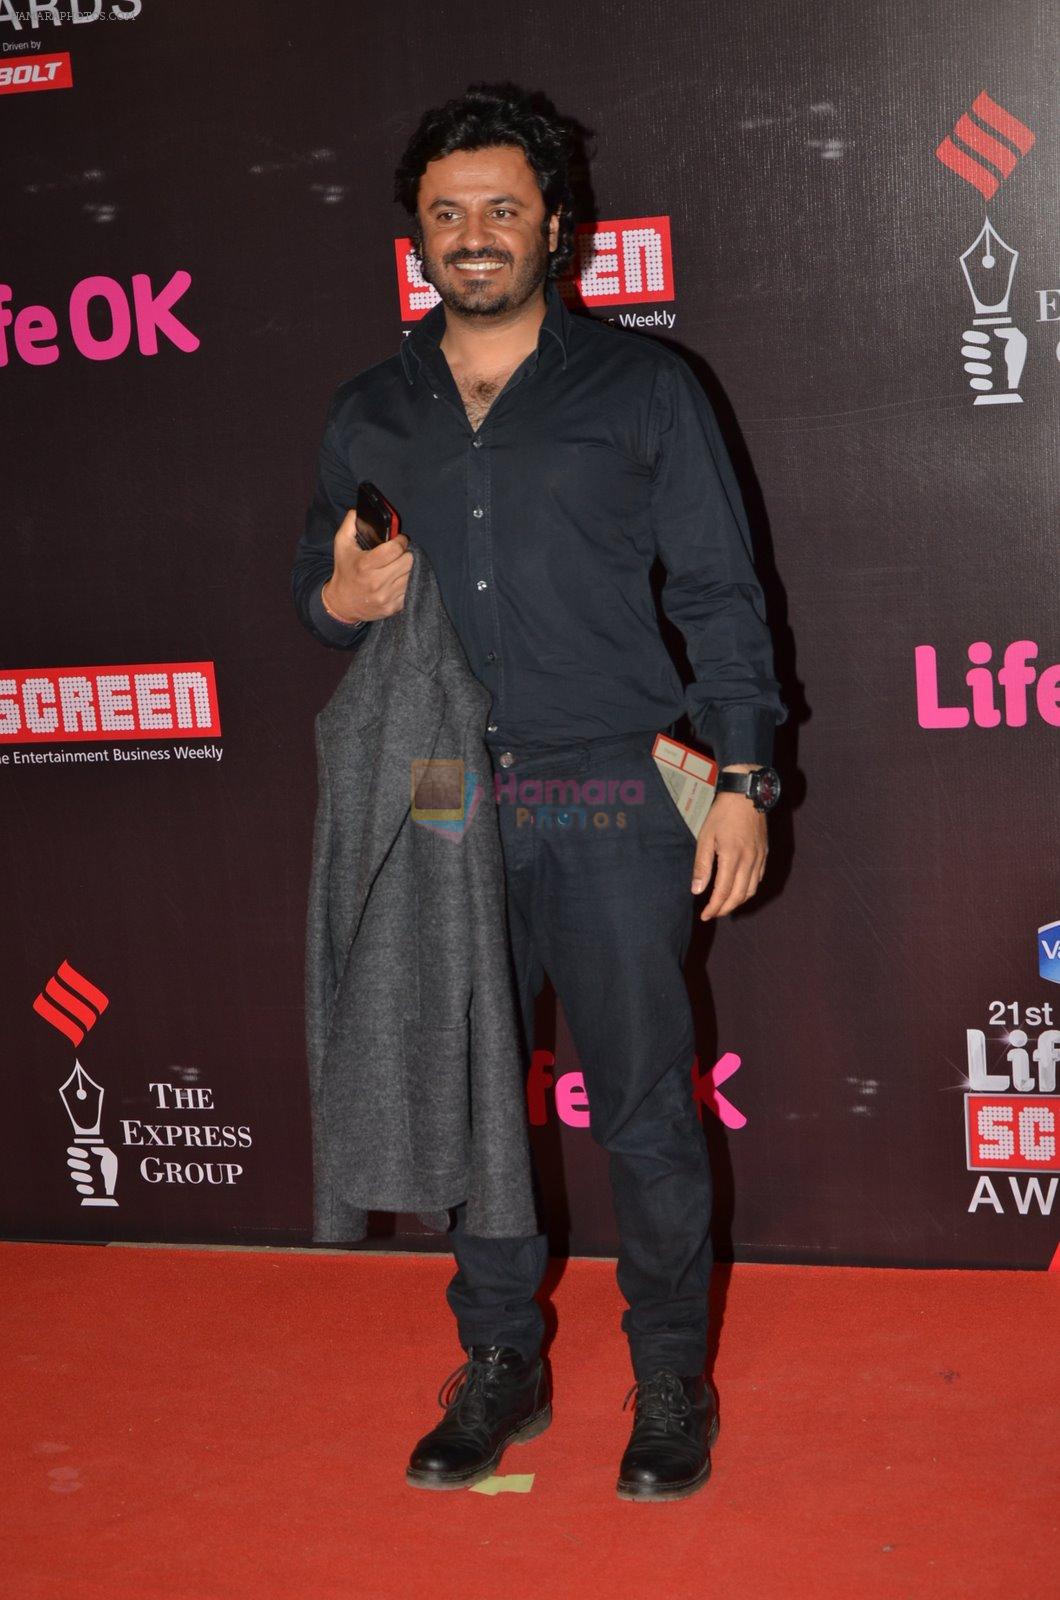 Vikas Bahl at Life Ok Screen Awards red carpet in Mumbai on 14th Jan 2015